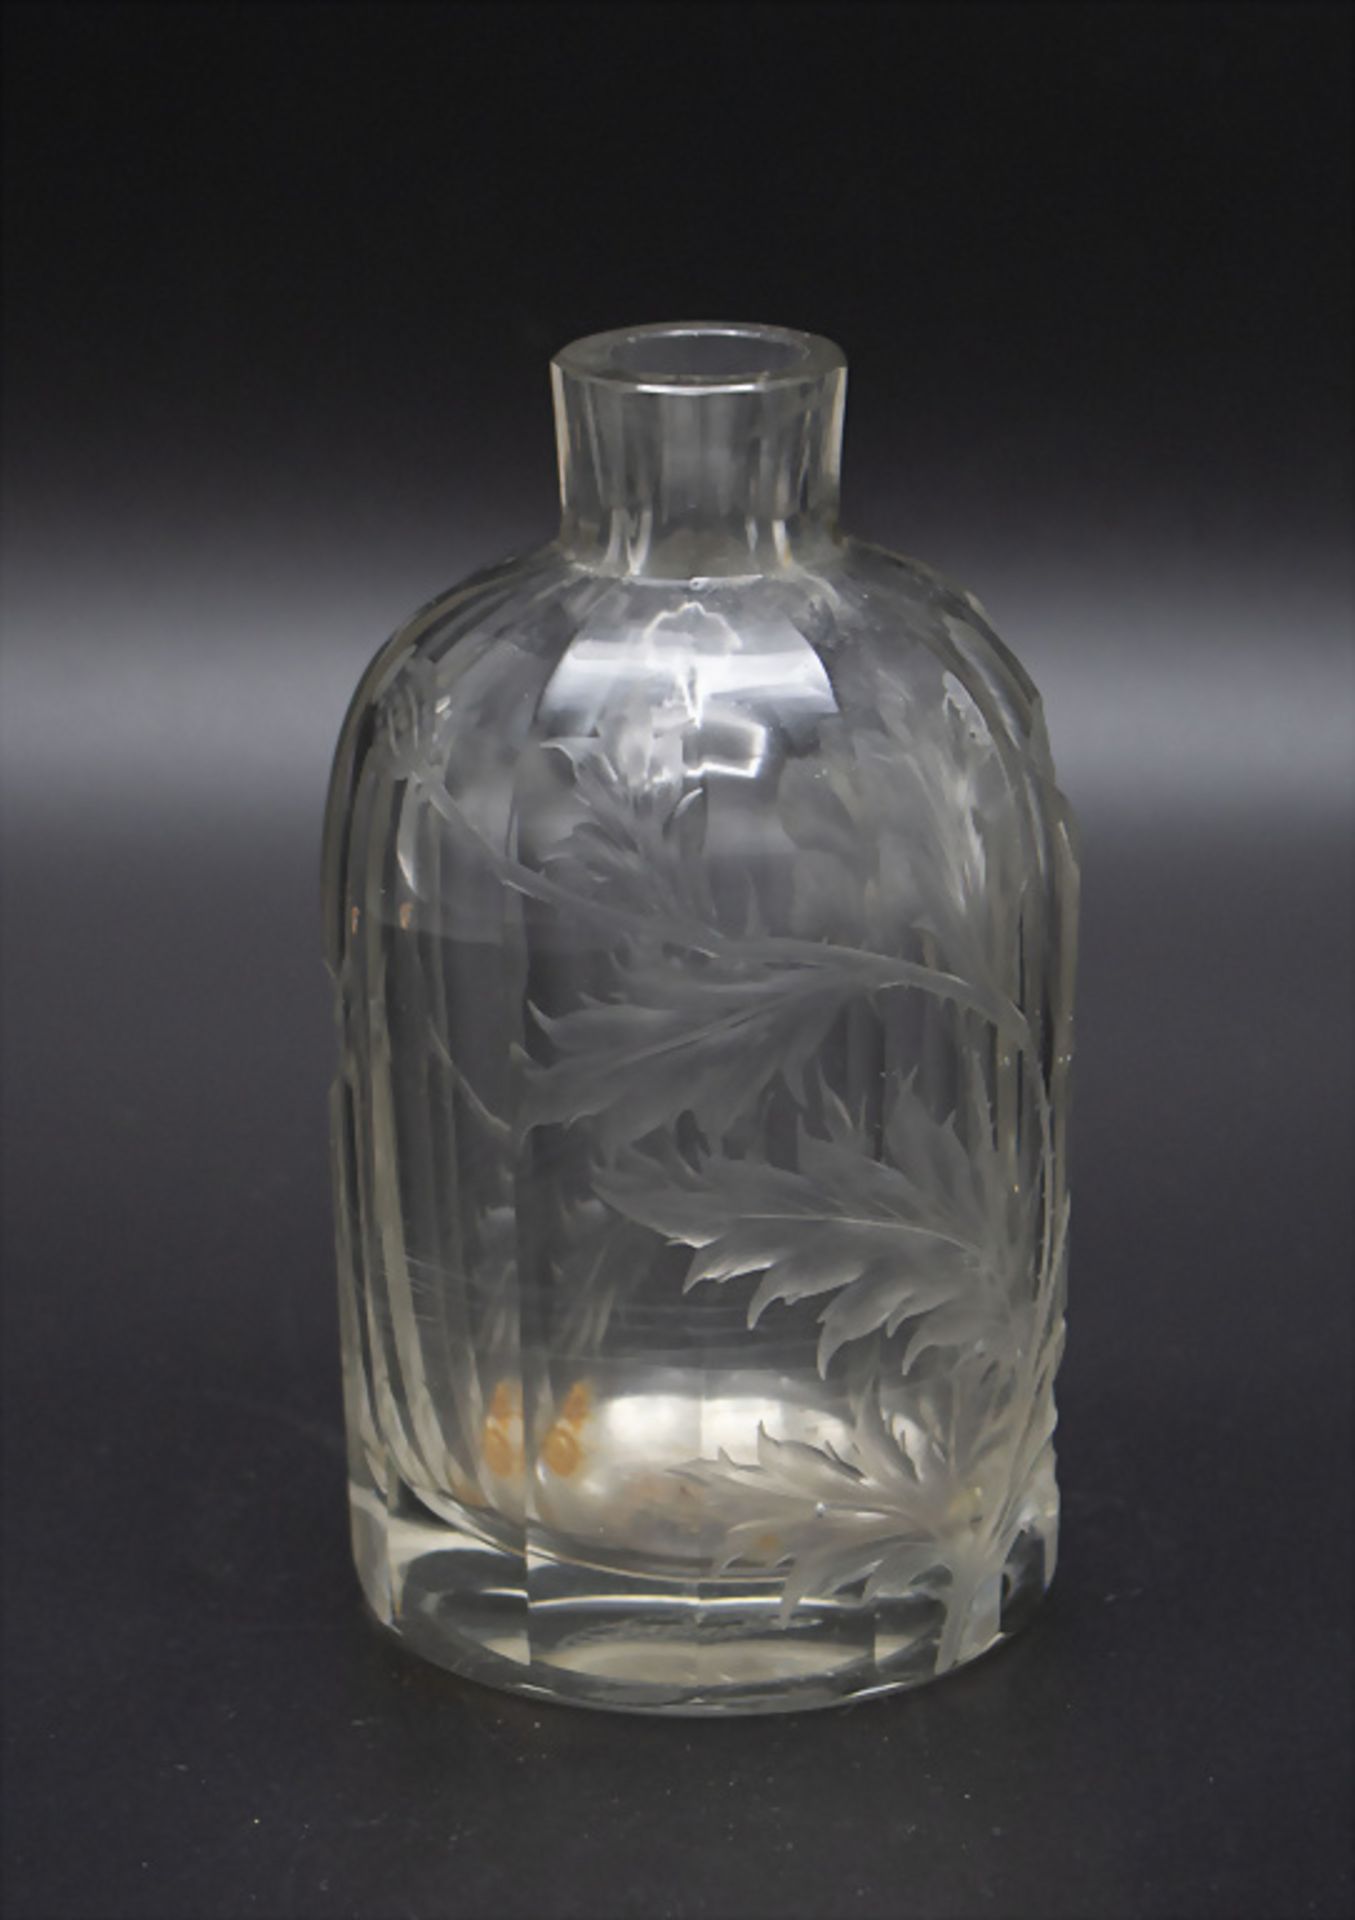 Jugendstil Glasflasche mit Mohnblume / An Art Nouveau glass bottle with poppy flower, Ludwig ... - Bild 2 aus 3